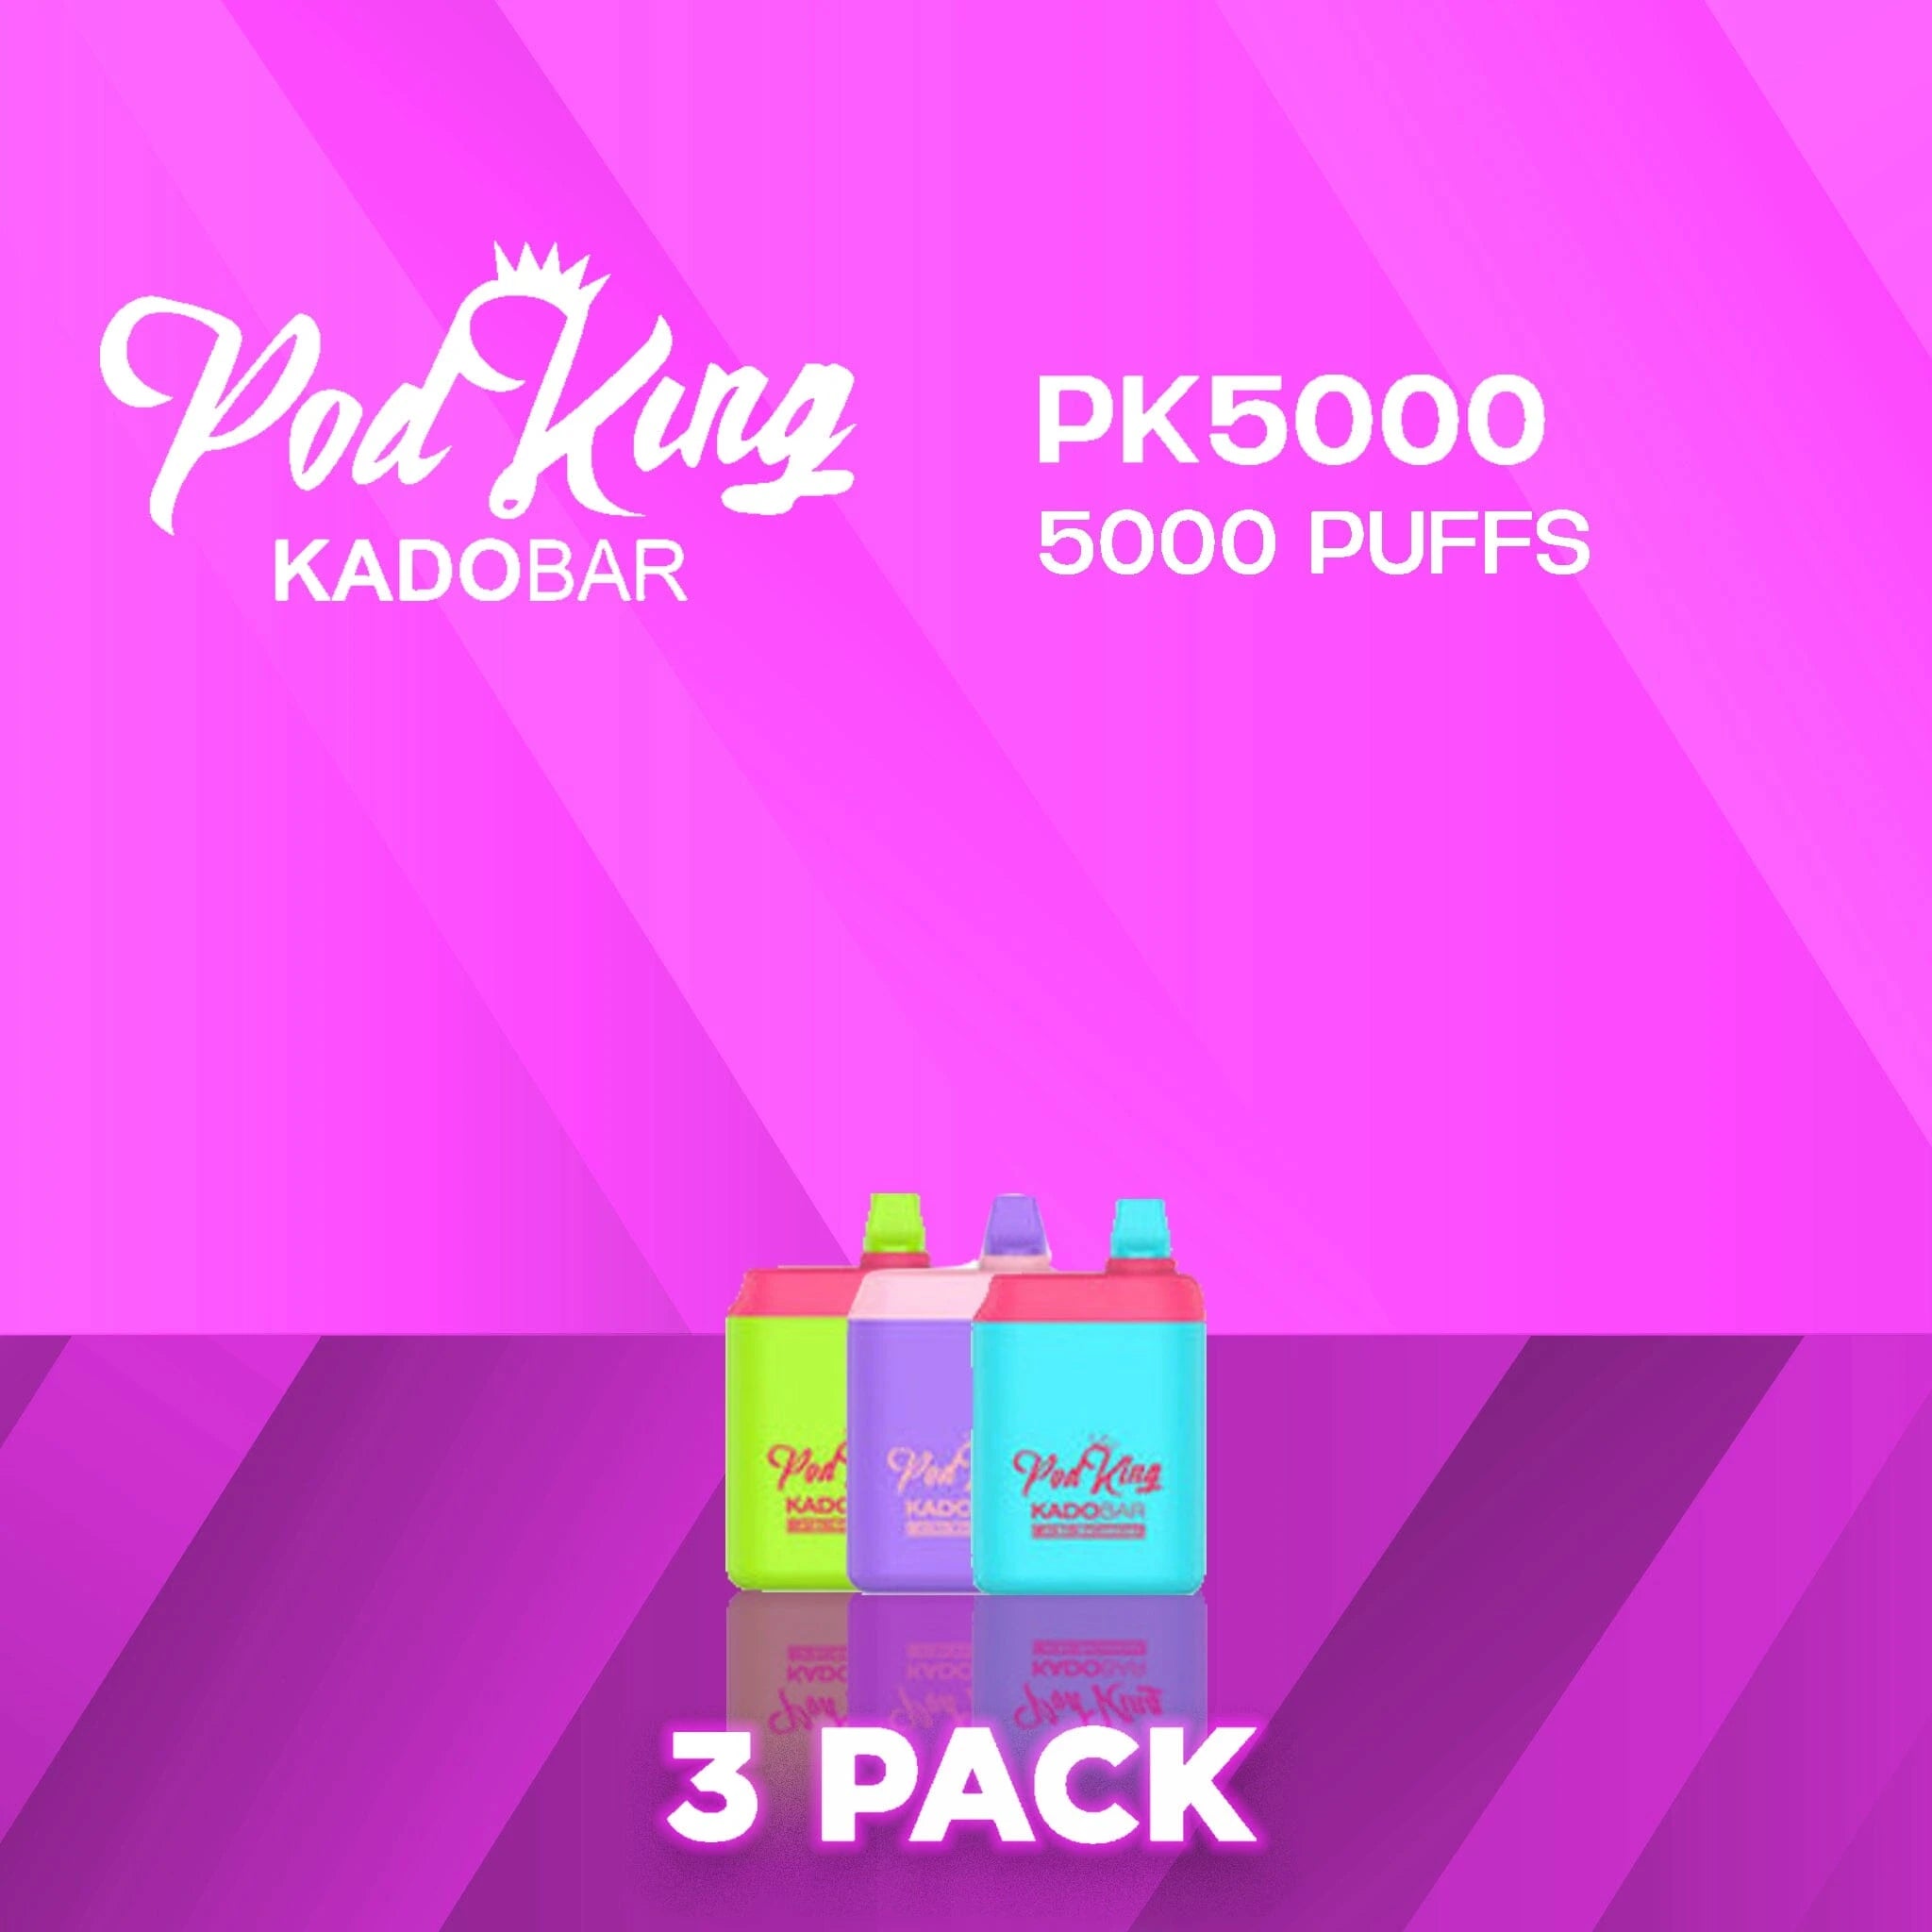 Pod King x Kado Bar PK5000 Disposable Vape - 3 Pack